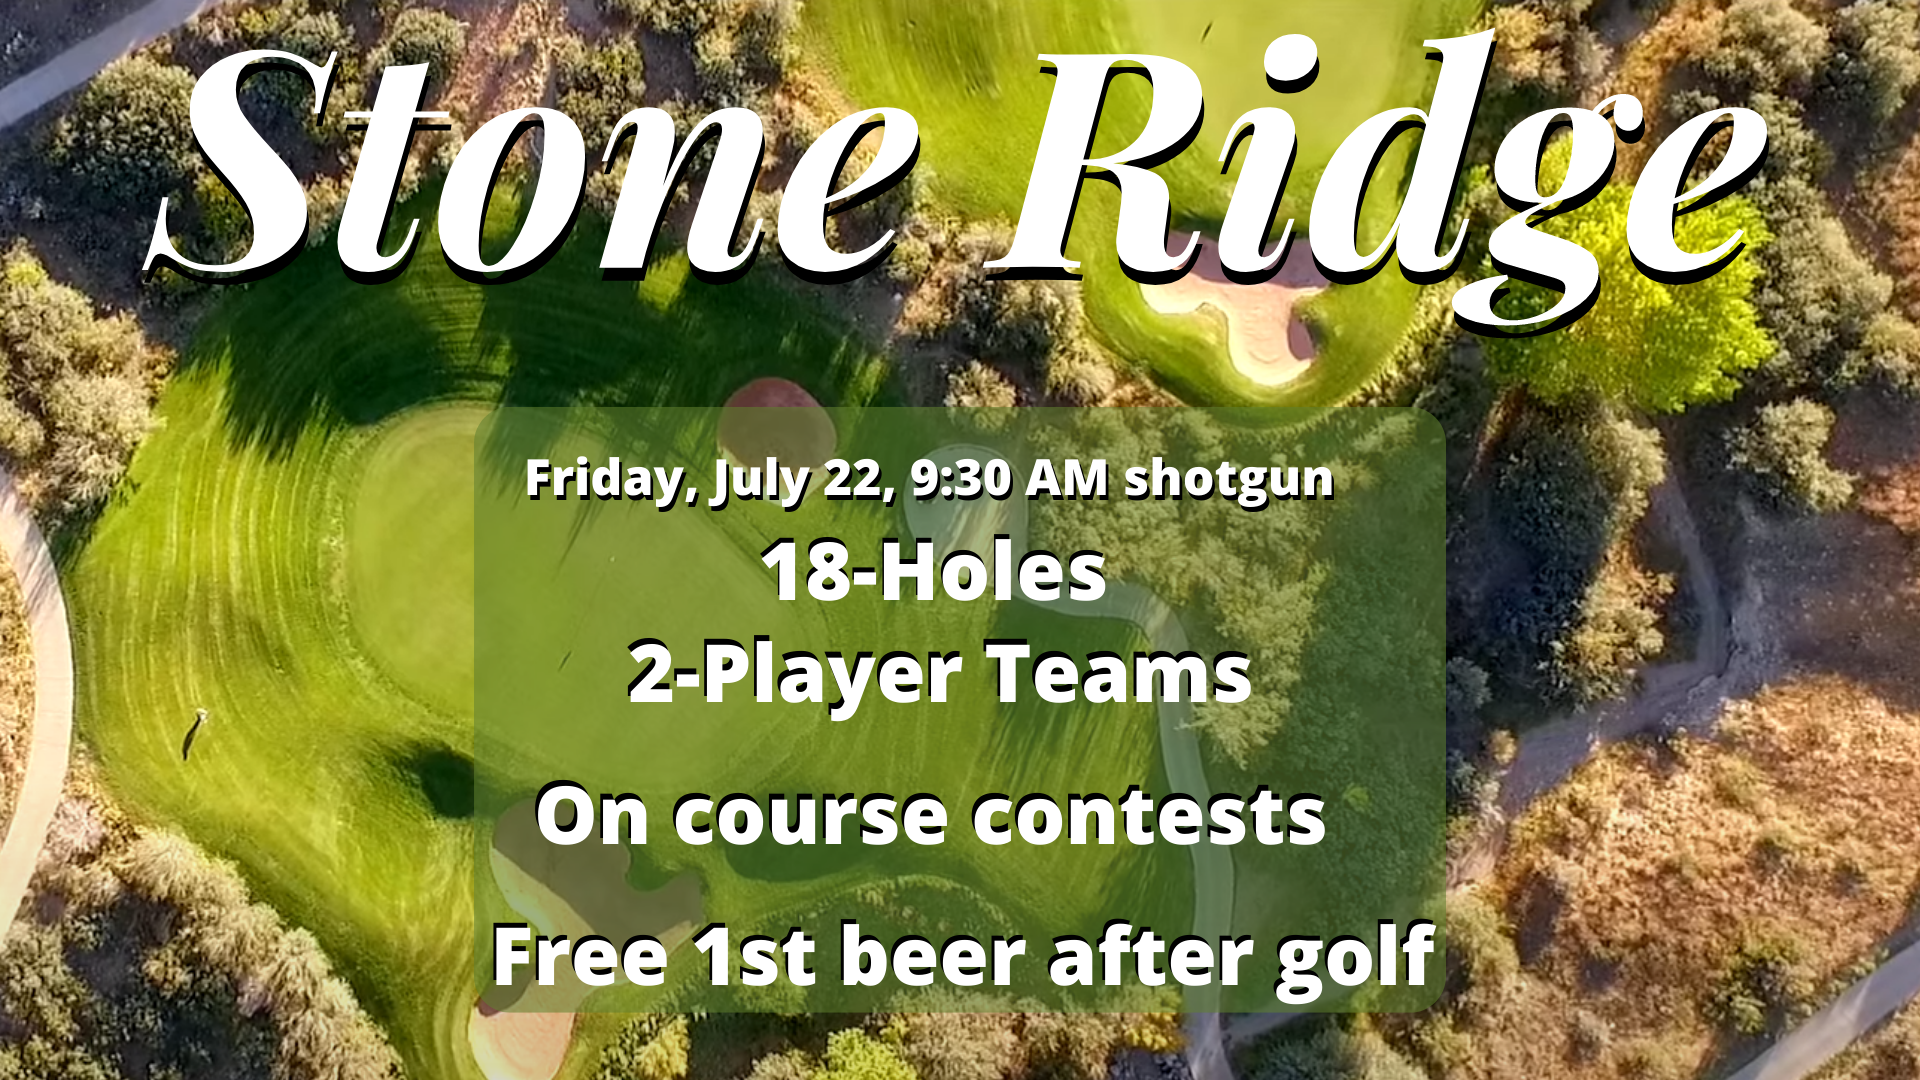 Golf tournament at Stone Ridge in prescott valley